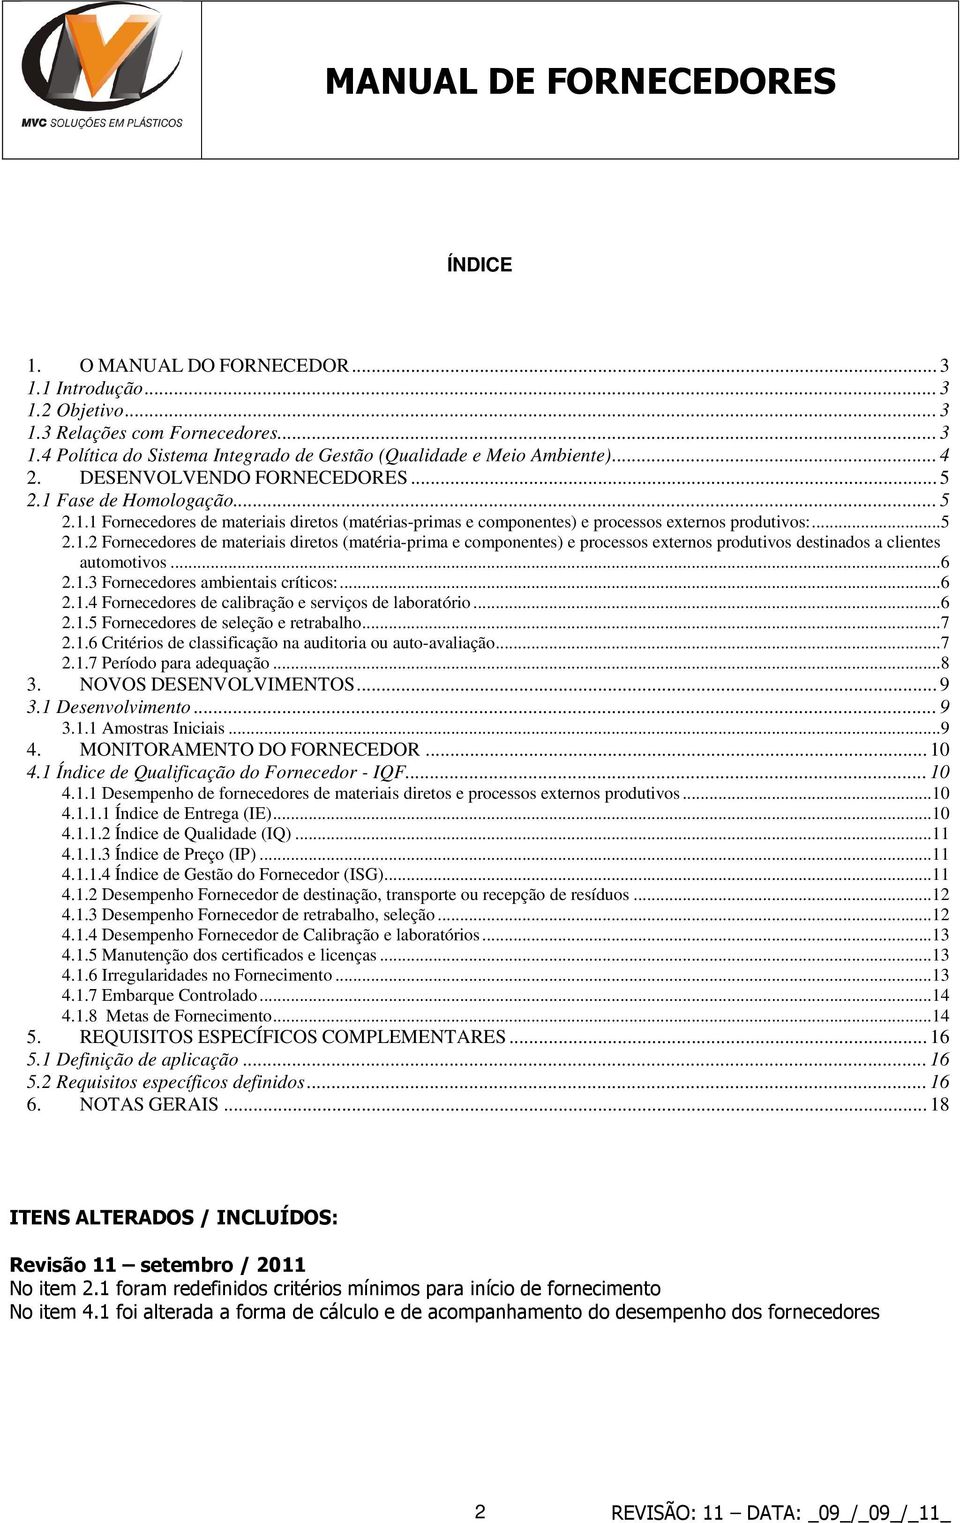 MANUAL DE FORNECEDORES - PDF Free Download